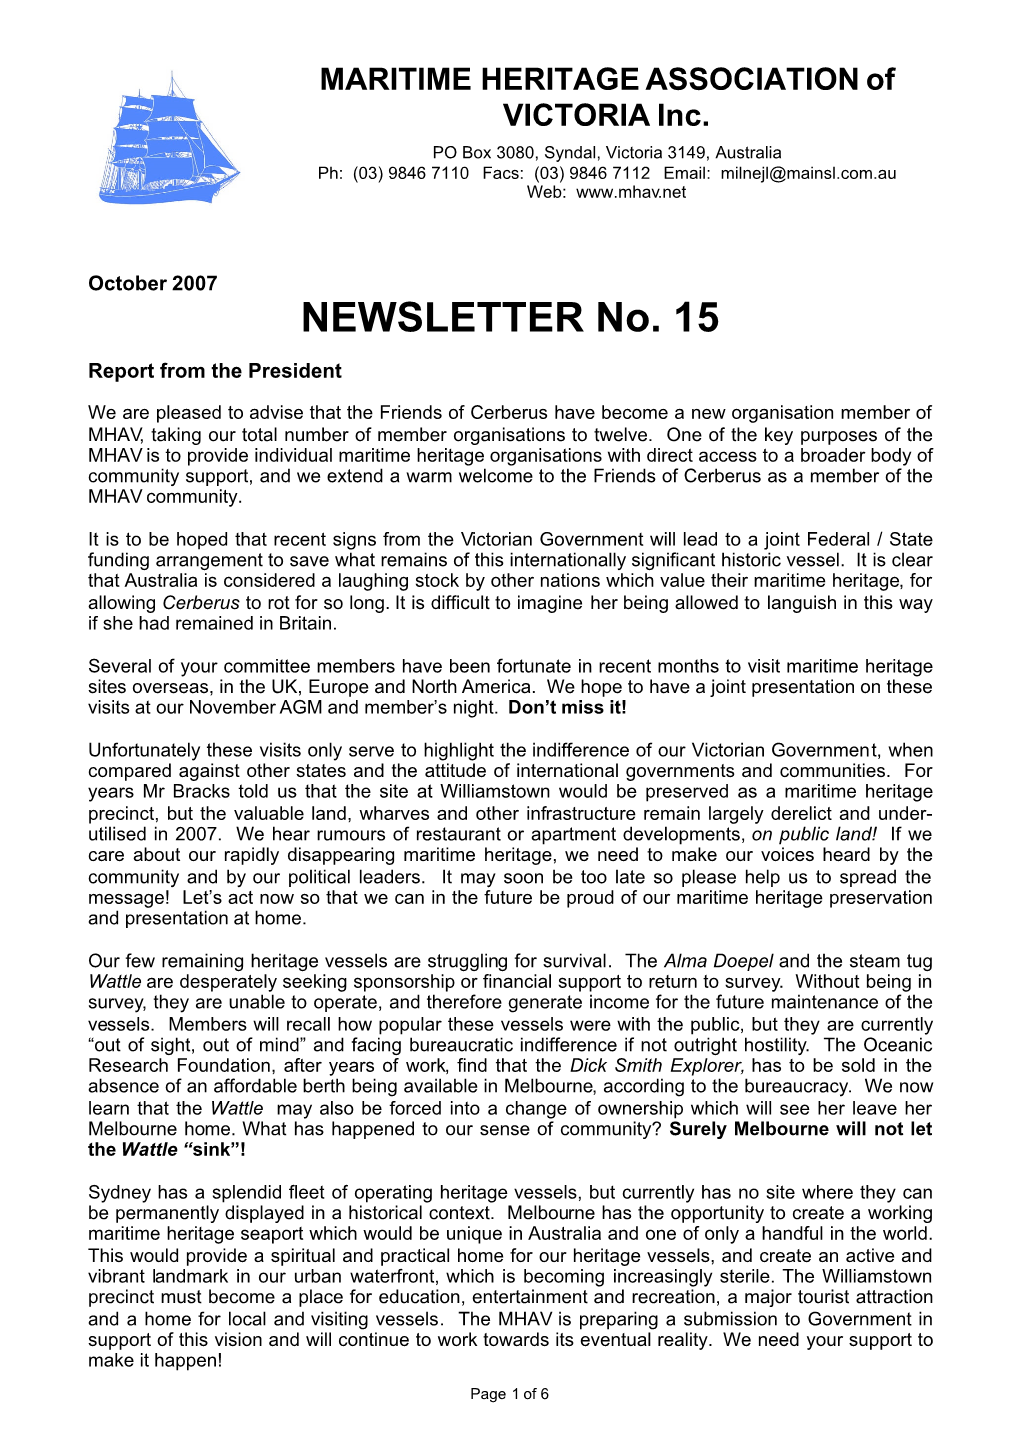 Newsletter 15, October 2007 (.Pdf, 0.31